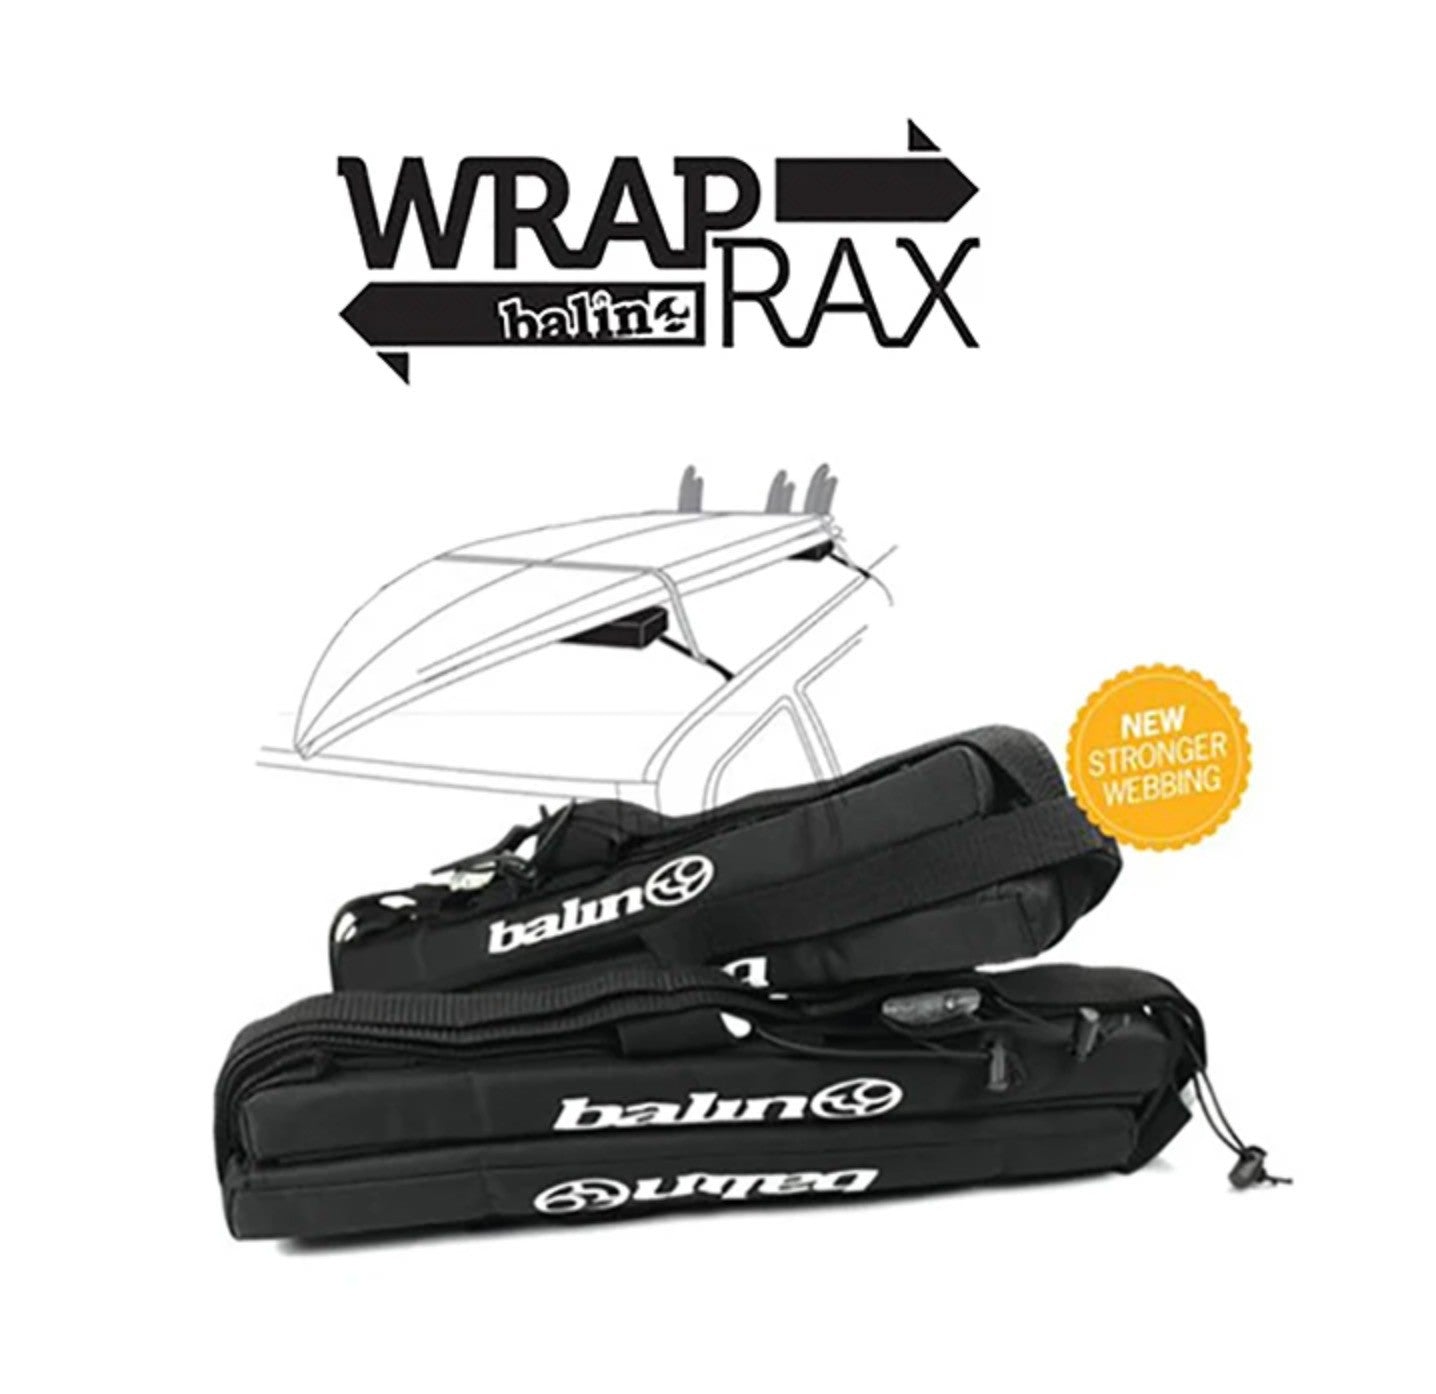 BALIN - Roof racks - Wrap Rax Single 1-2 SUP Board